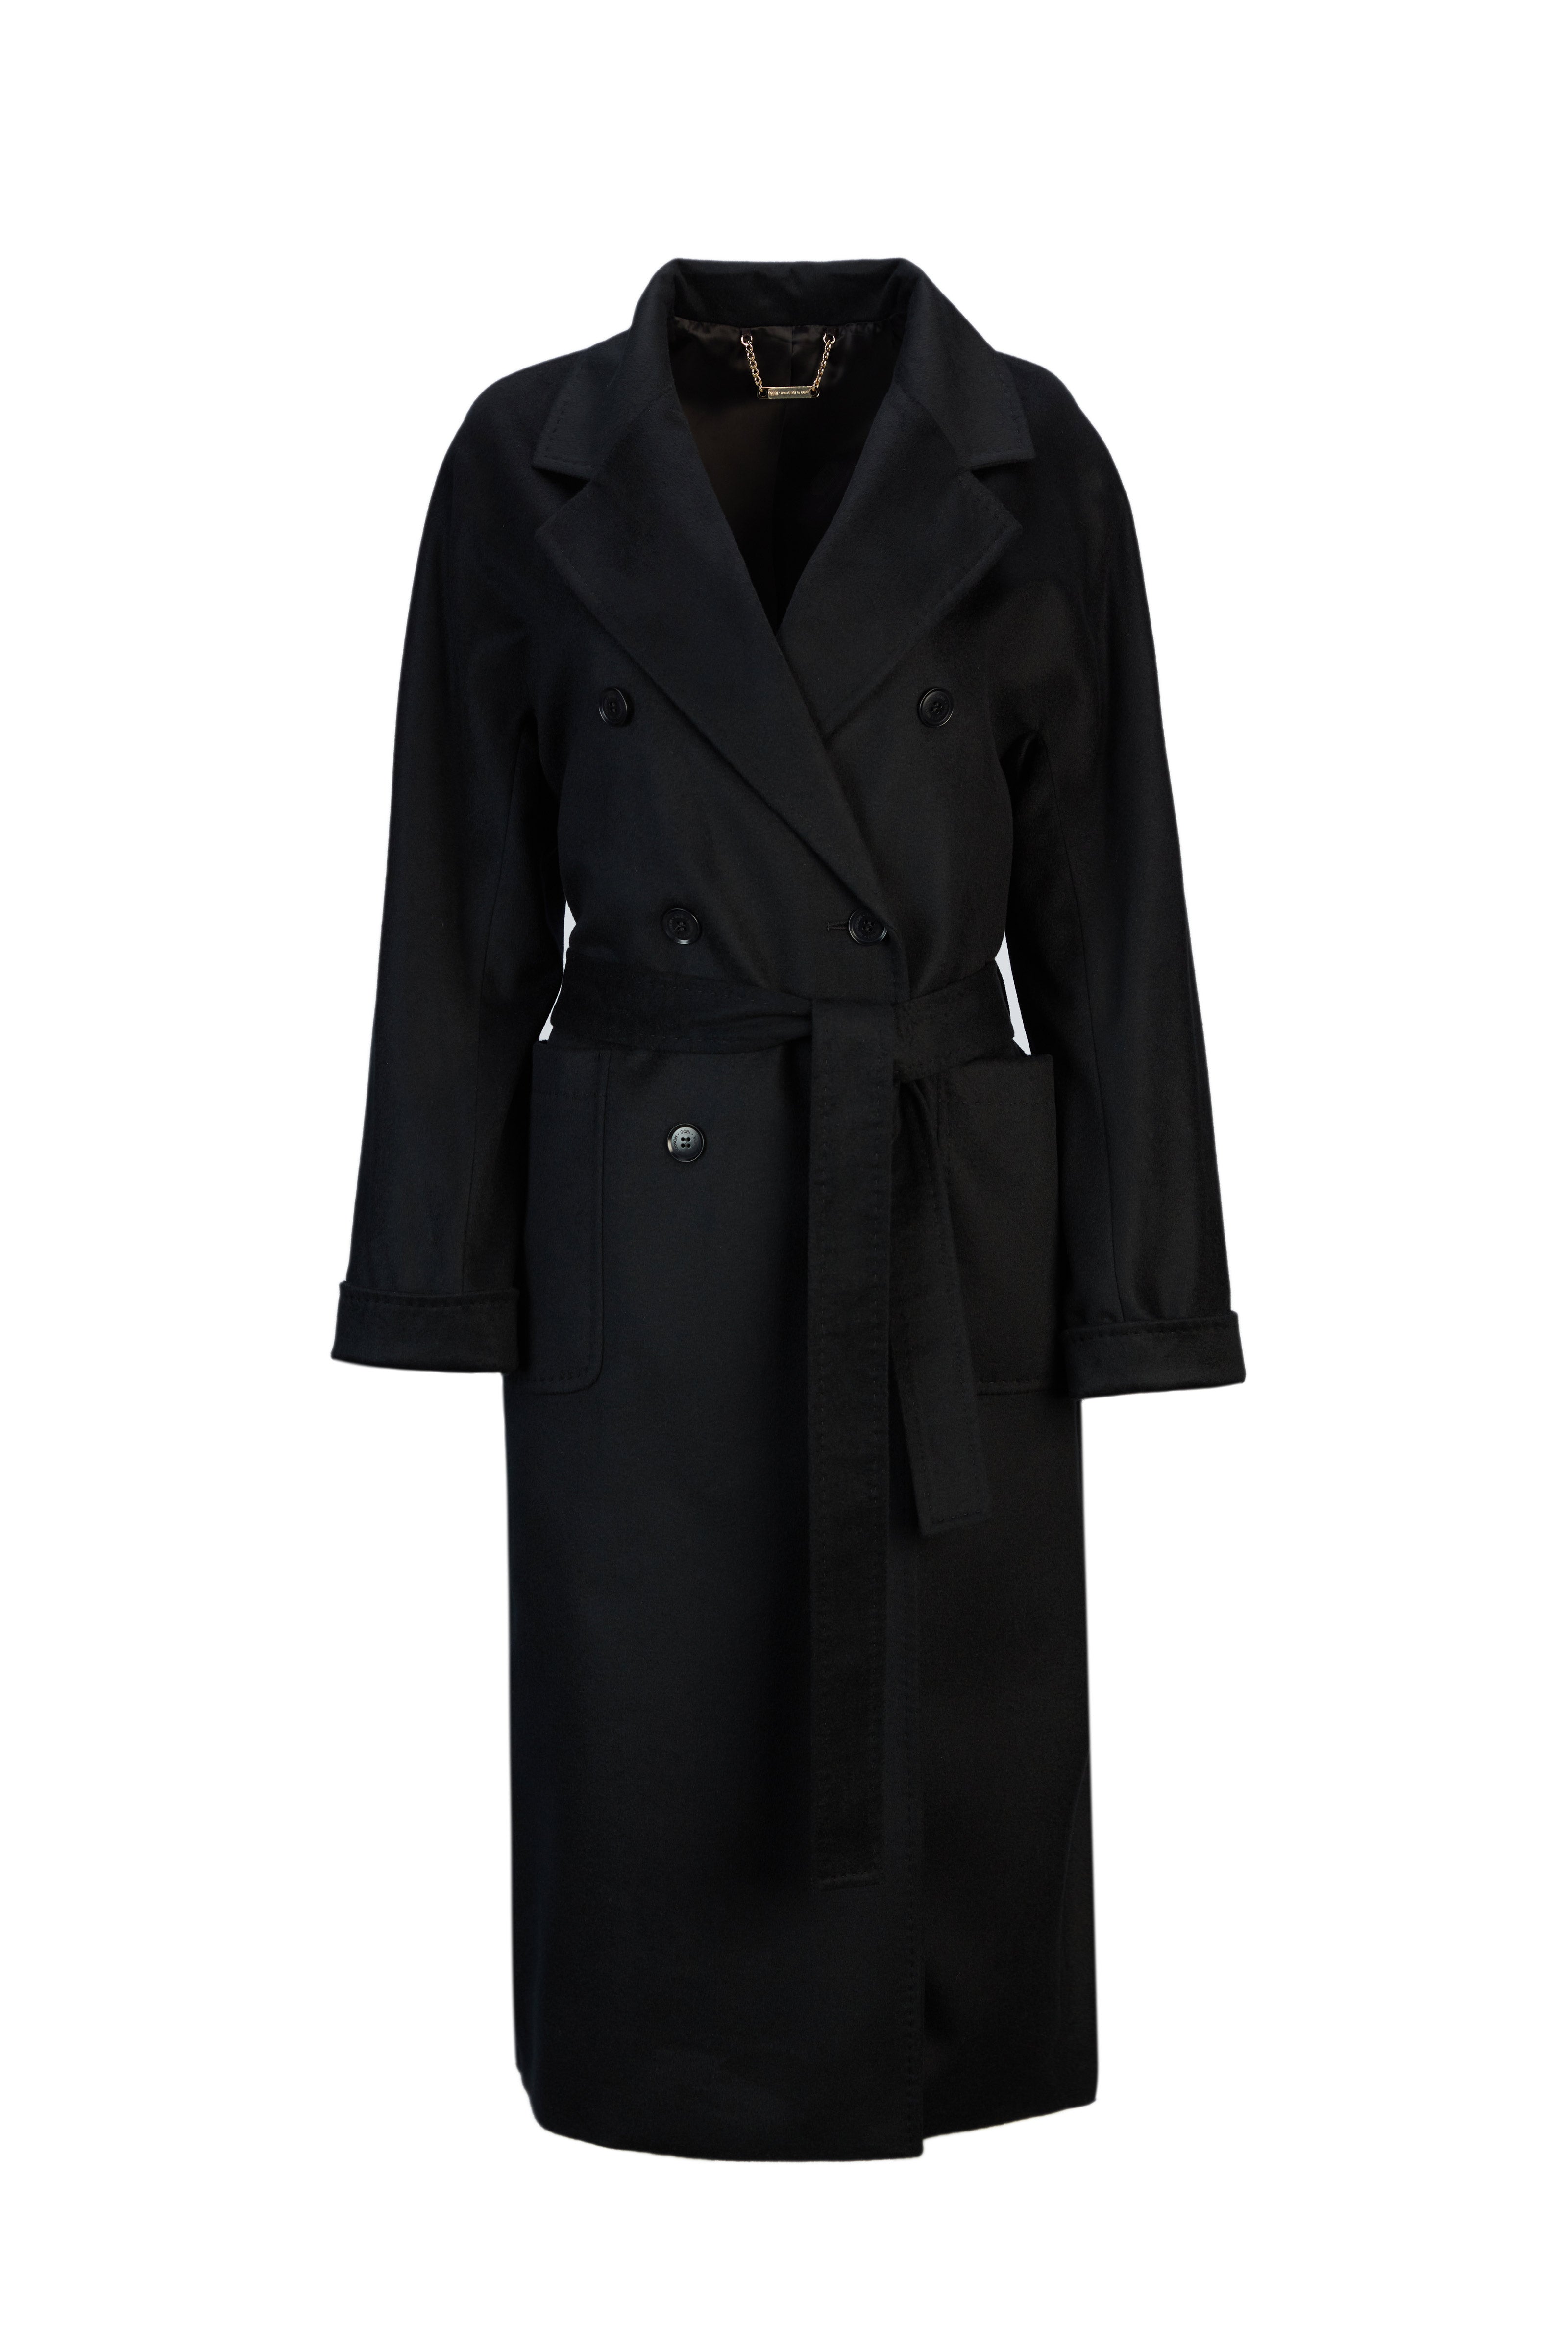 Men Premium Long Black Overcoat  Double Breasted Black Wool Coat